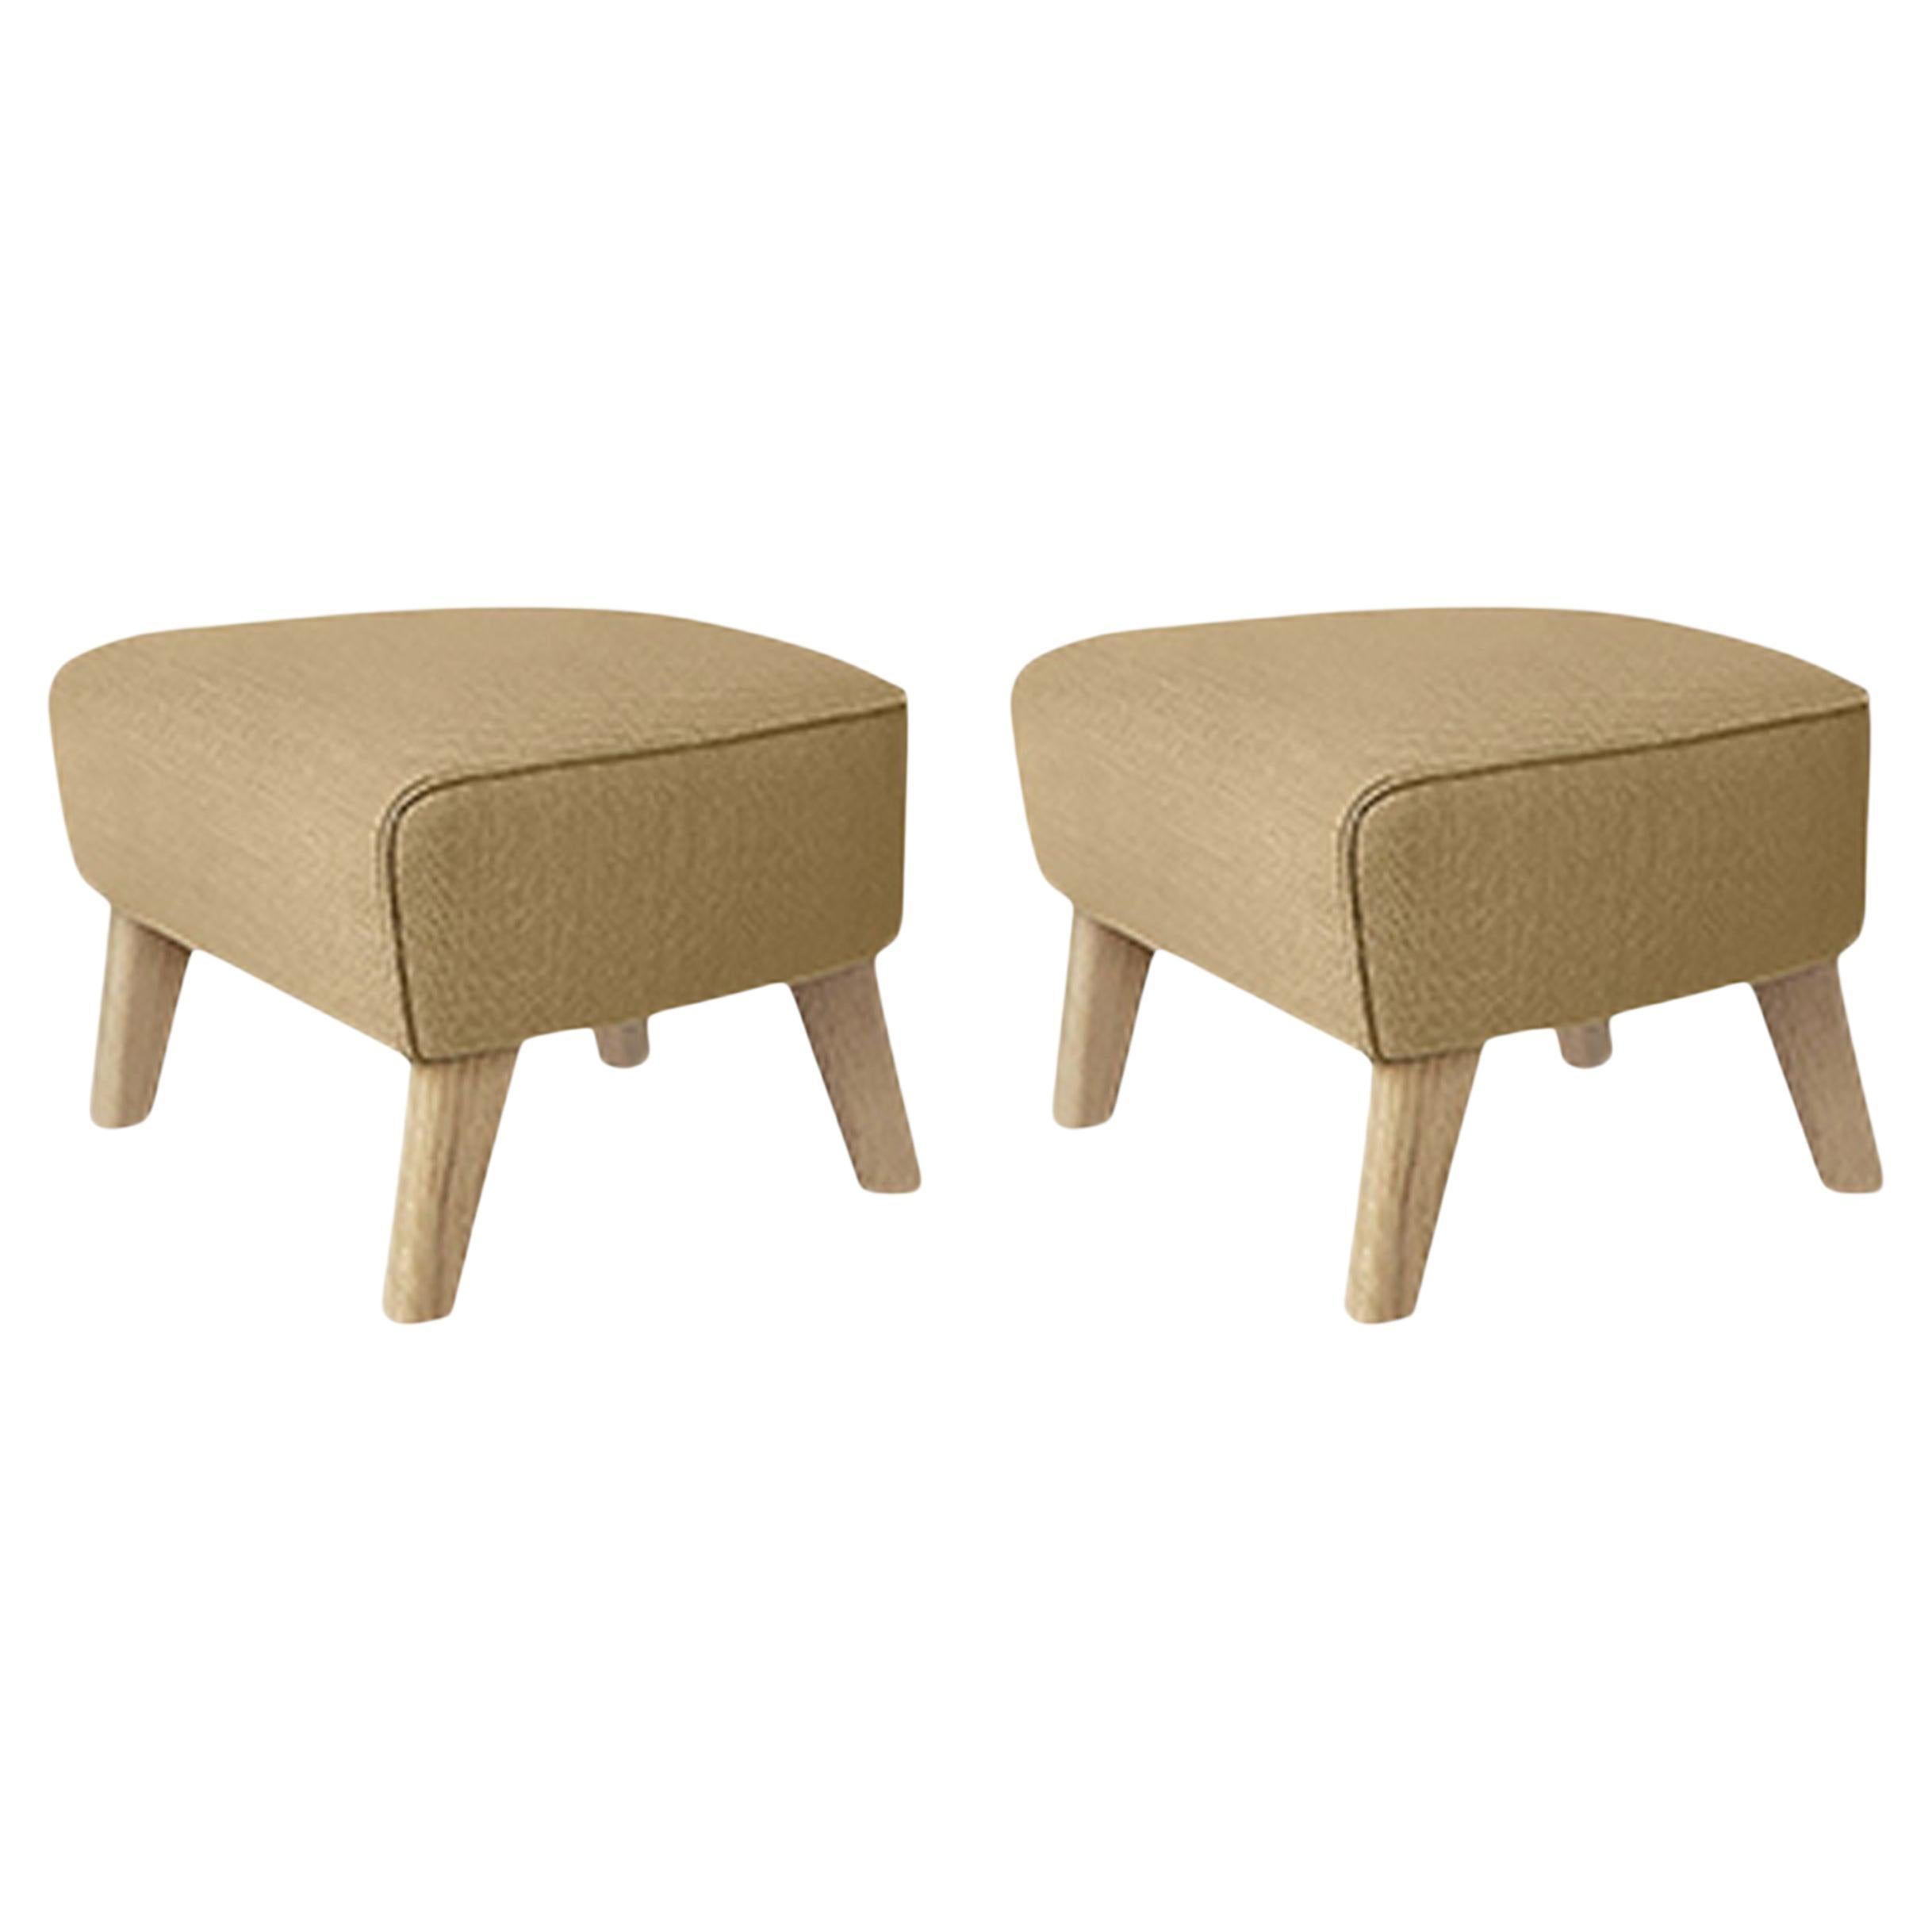 Set of 2 Sand, Natural Oak Raf Simons Vidar 3 My Own Chair Footstool by Lassen For Sale